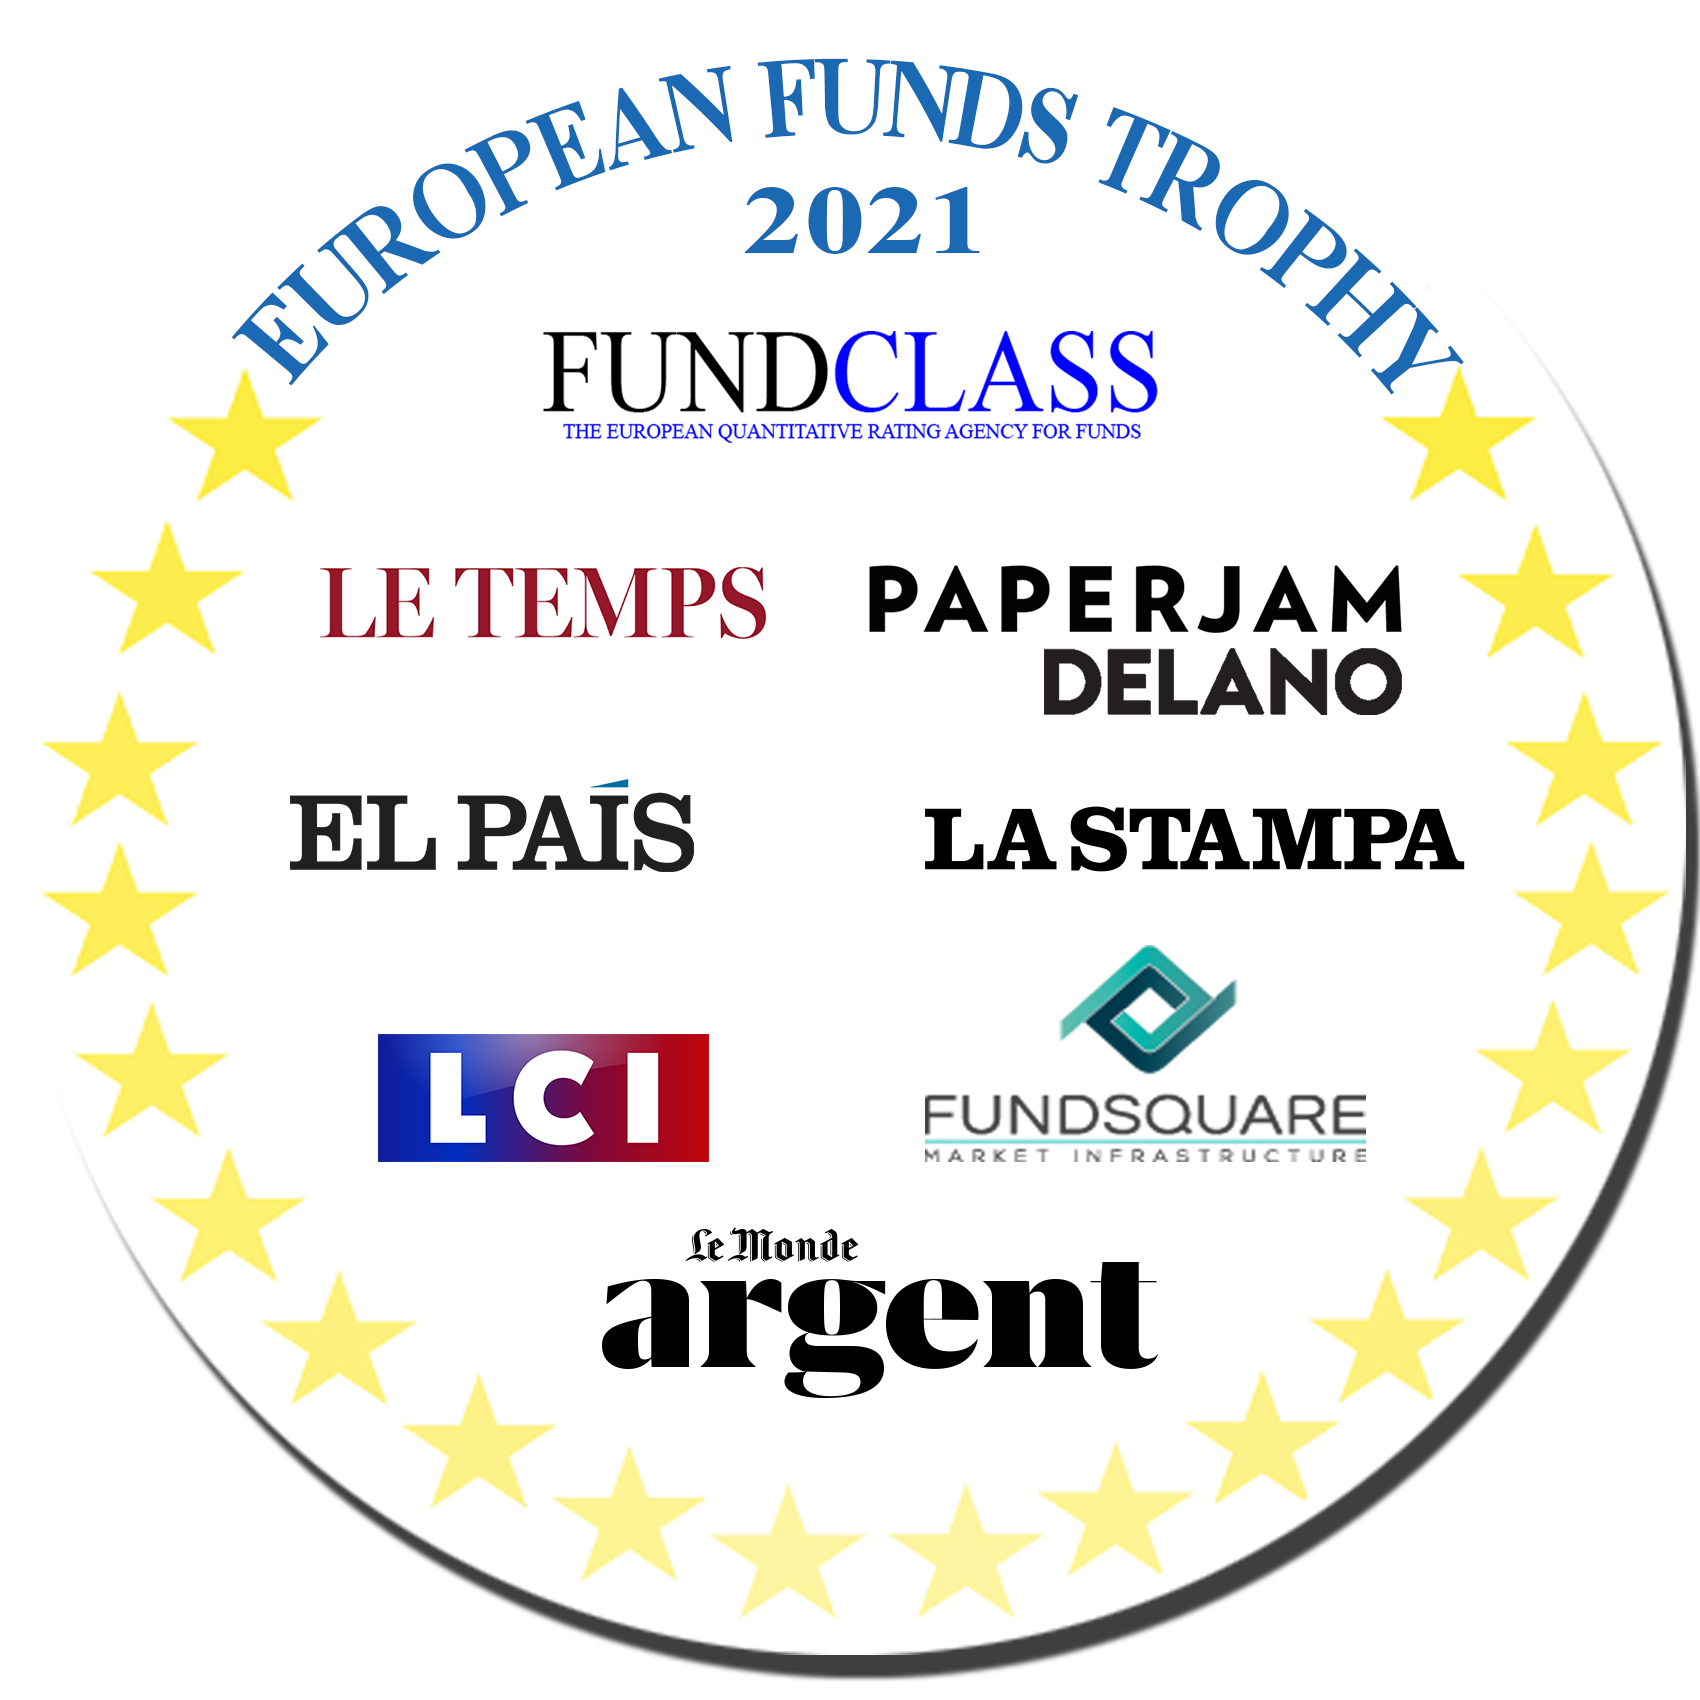 European Funds Trophy 2021